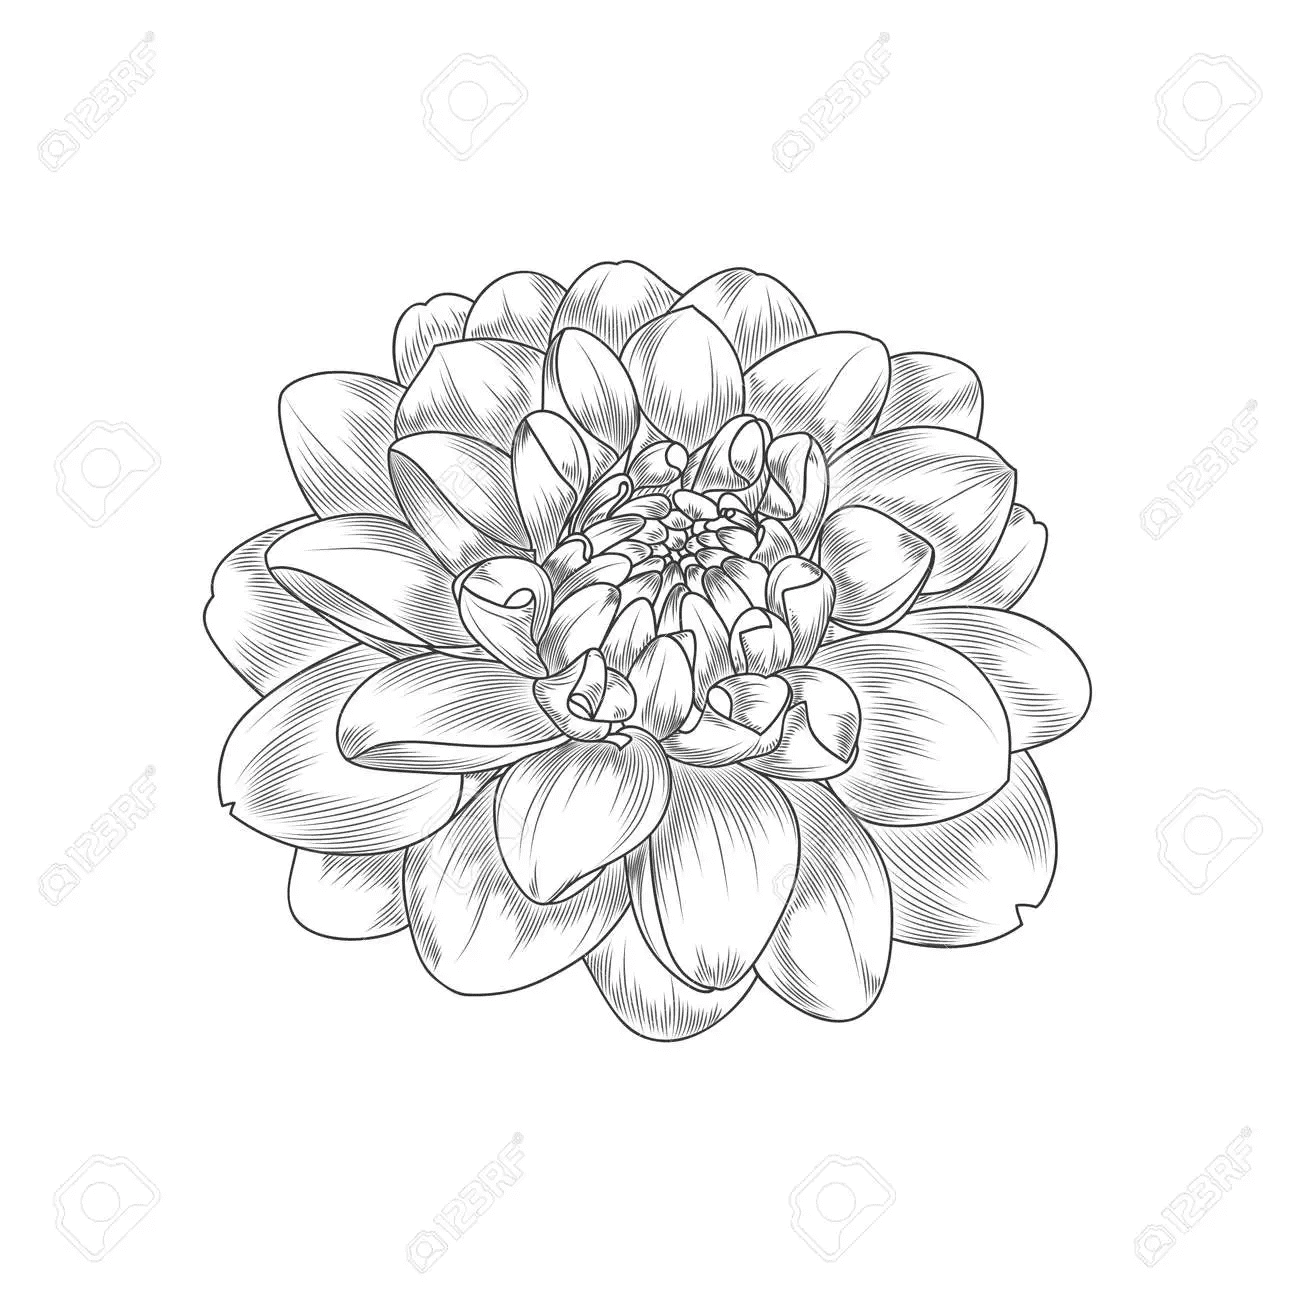 Abstract hand-drawn monochrome flower dahlia